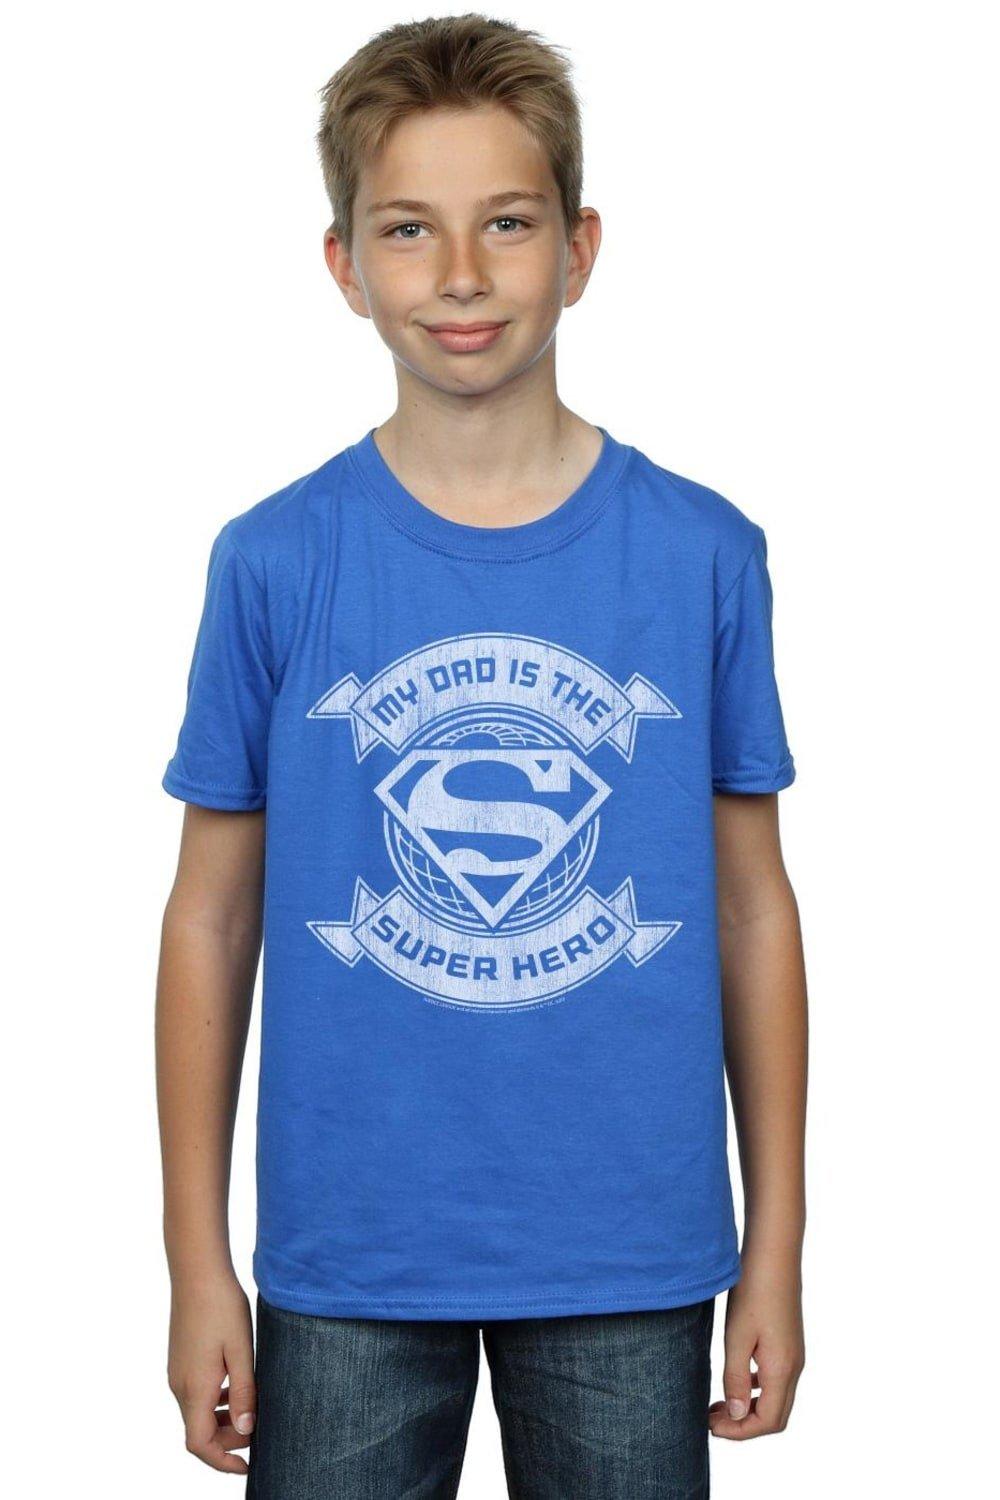 Superman My Dad The Superhero T-Shirt